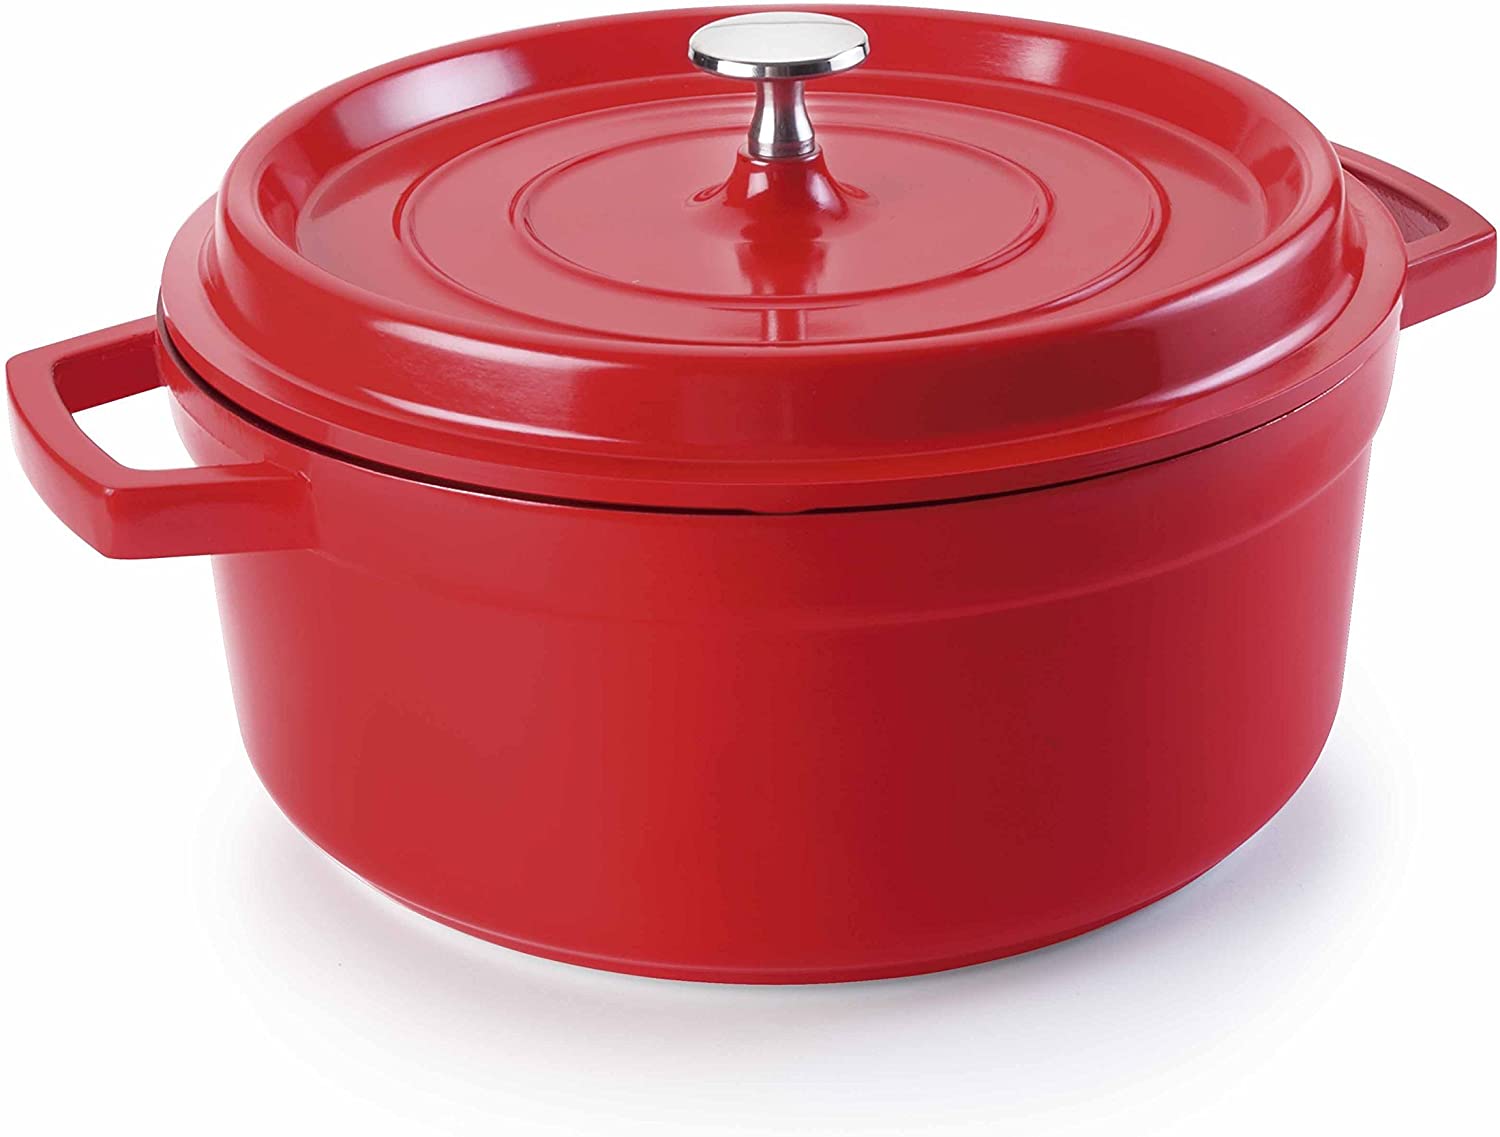 Lacor - 25928 - Red Stewing Pot - Cast Aluminium with Glass Lid - 28 cm Diameter